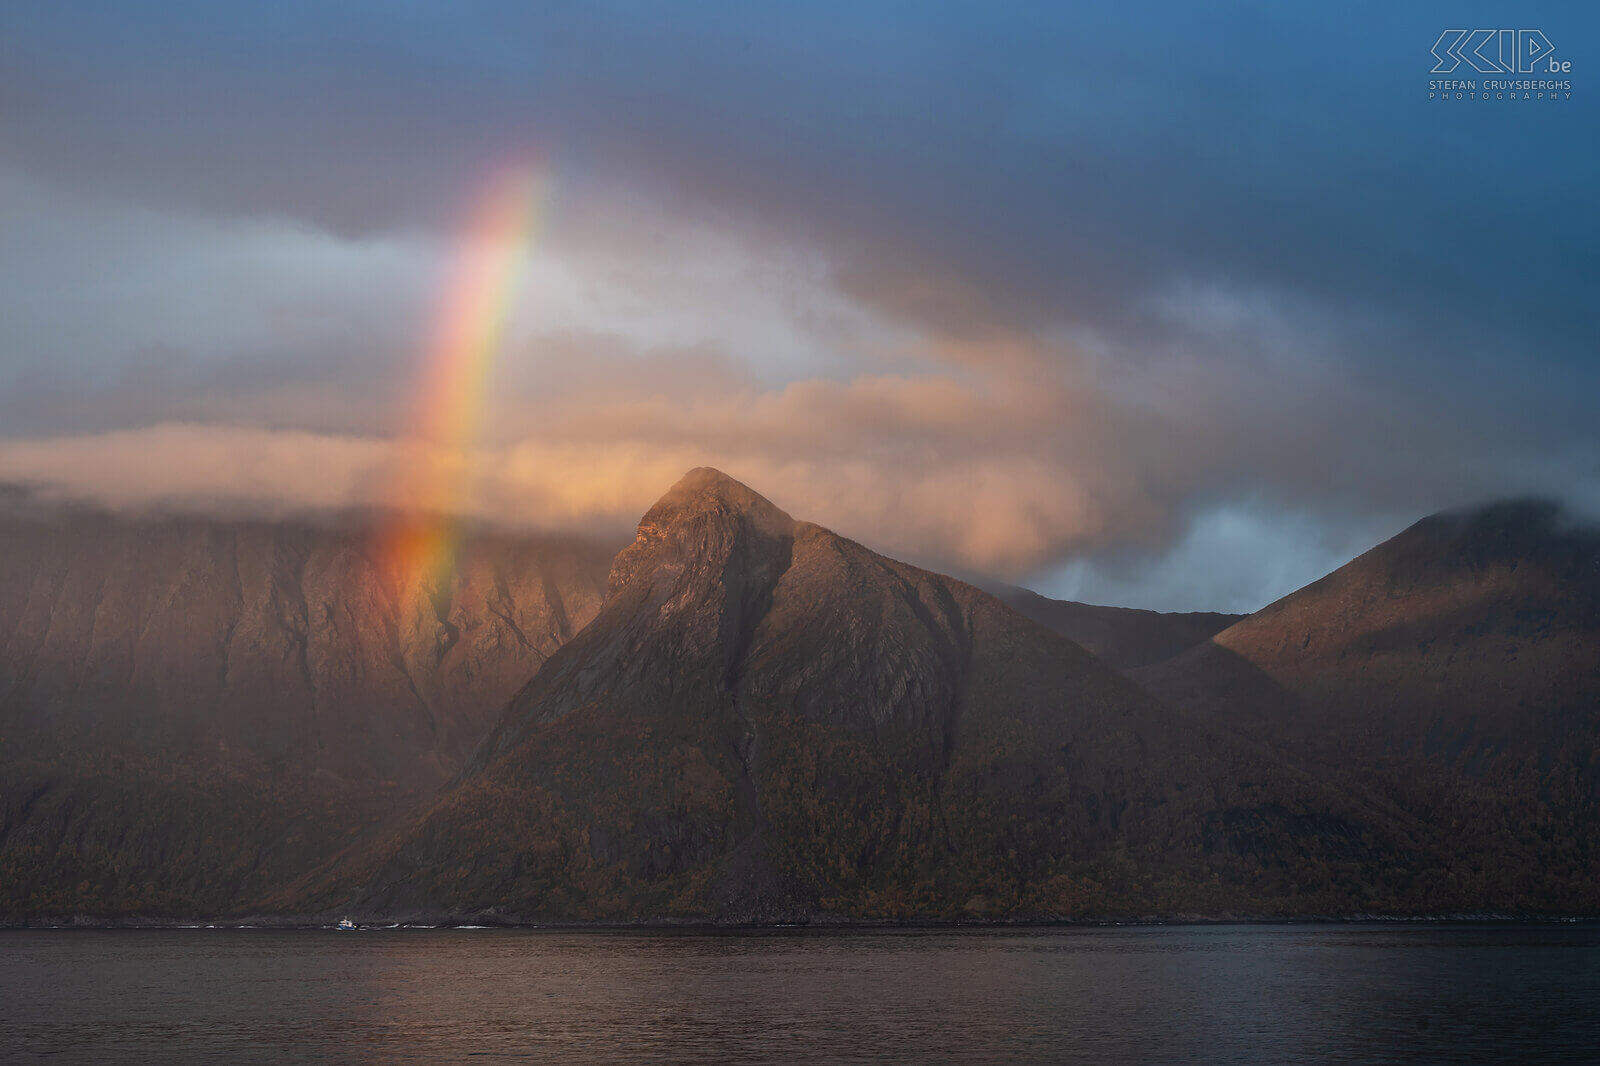 Norway - Senja - Mefjordvaer - Rainbow A rainbow after some heavy rain showers in Mefjordvaer Stefan Cruysberghs